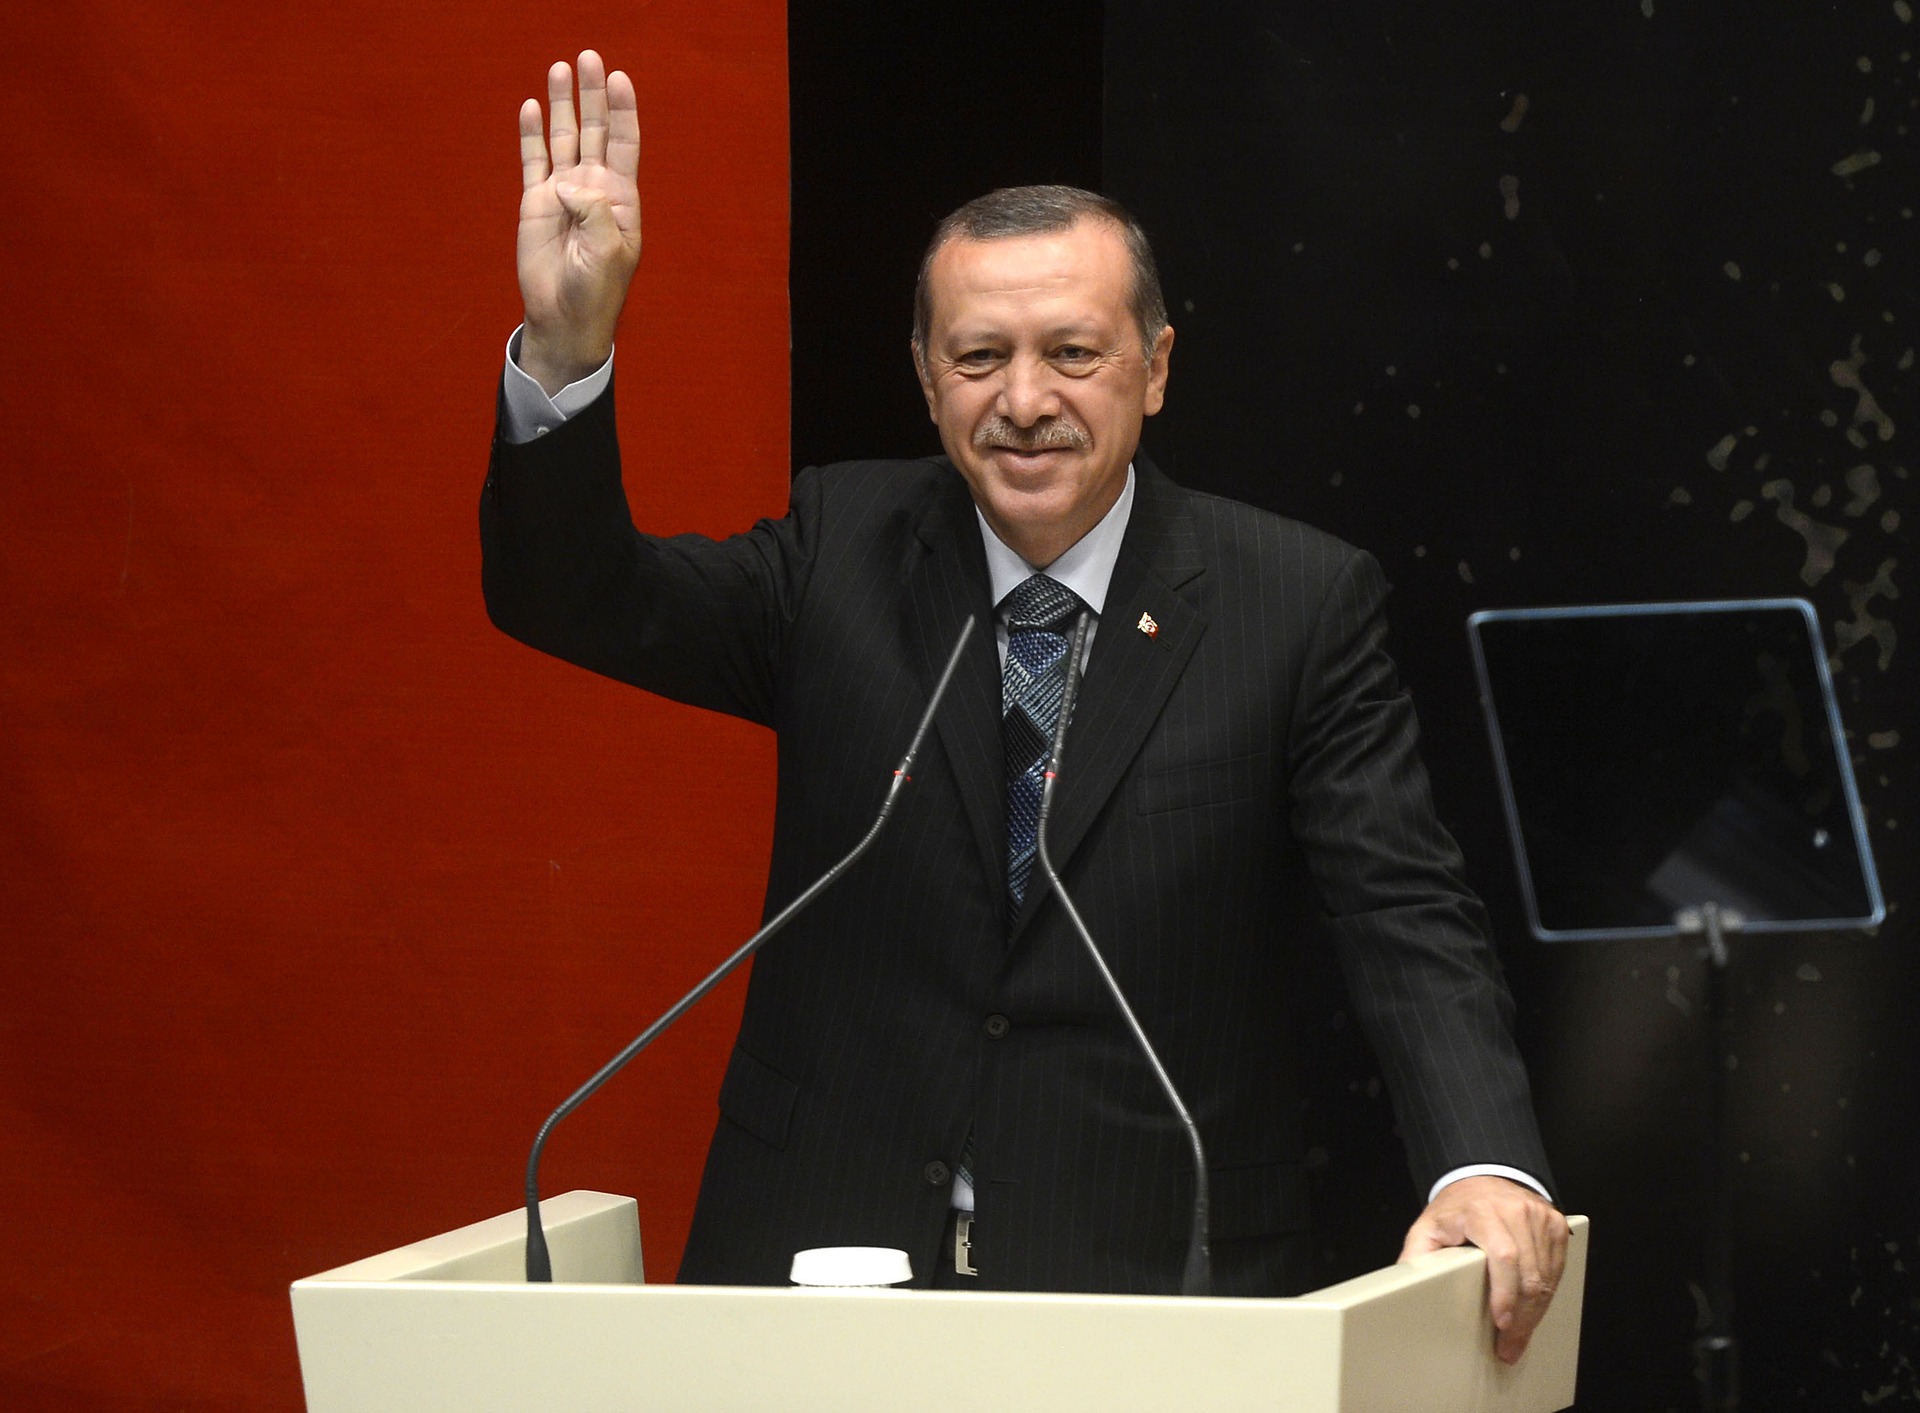 Presiden Erdogan kutuk penghinaan terhadap Nabi Muhammad